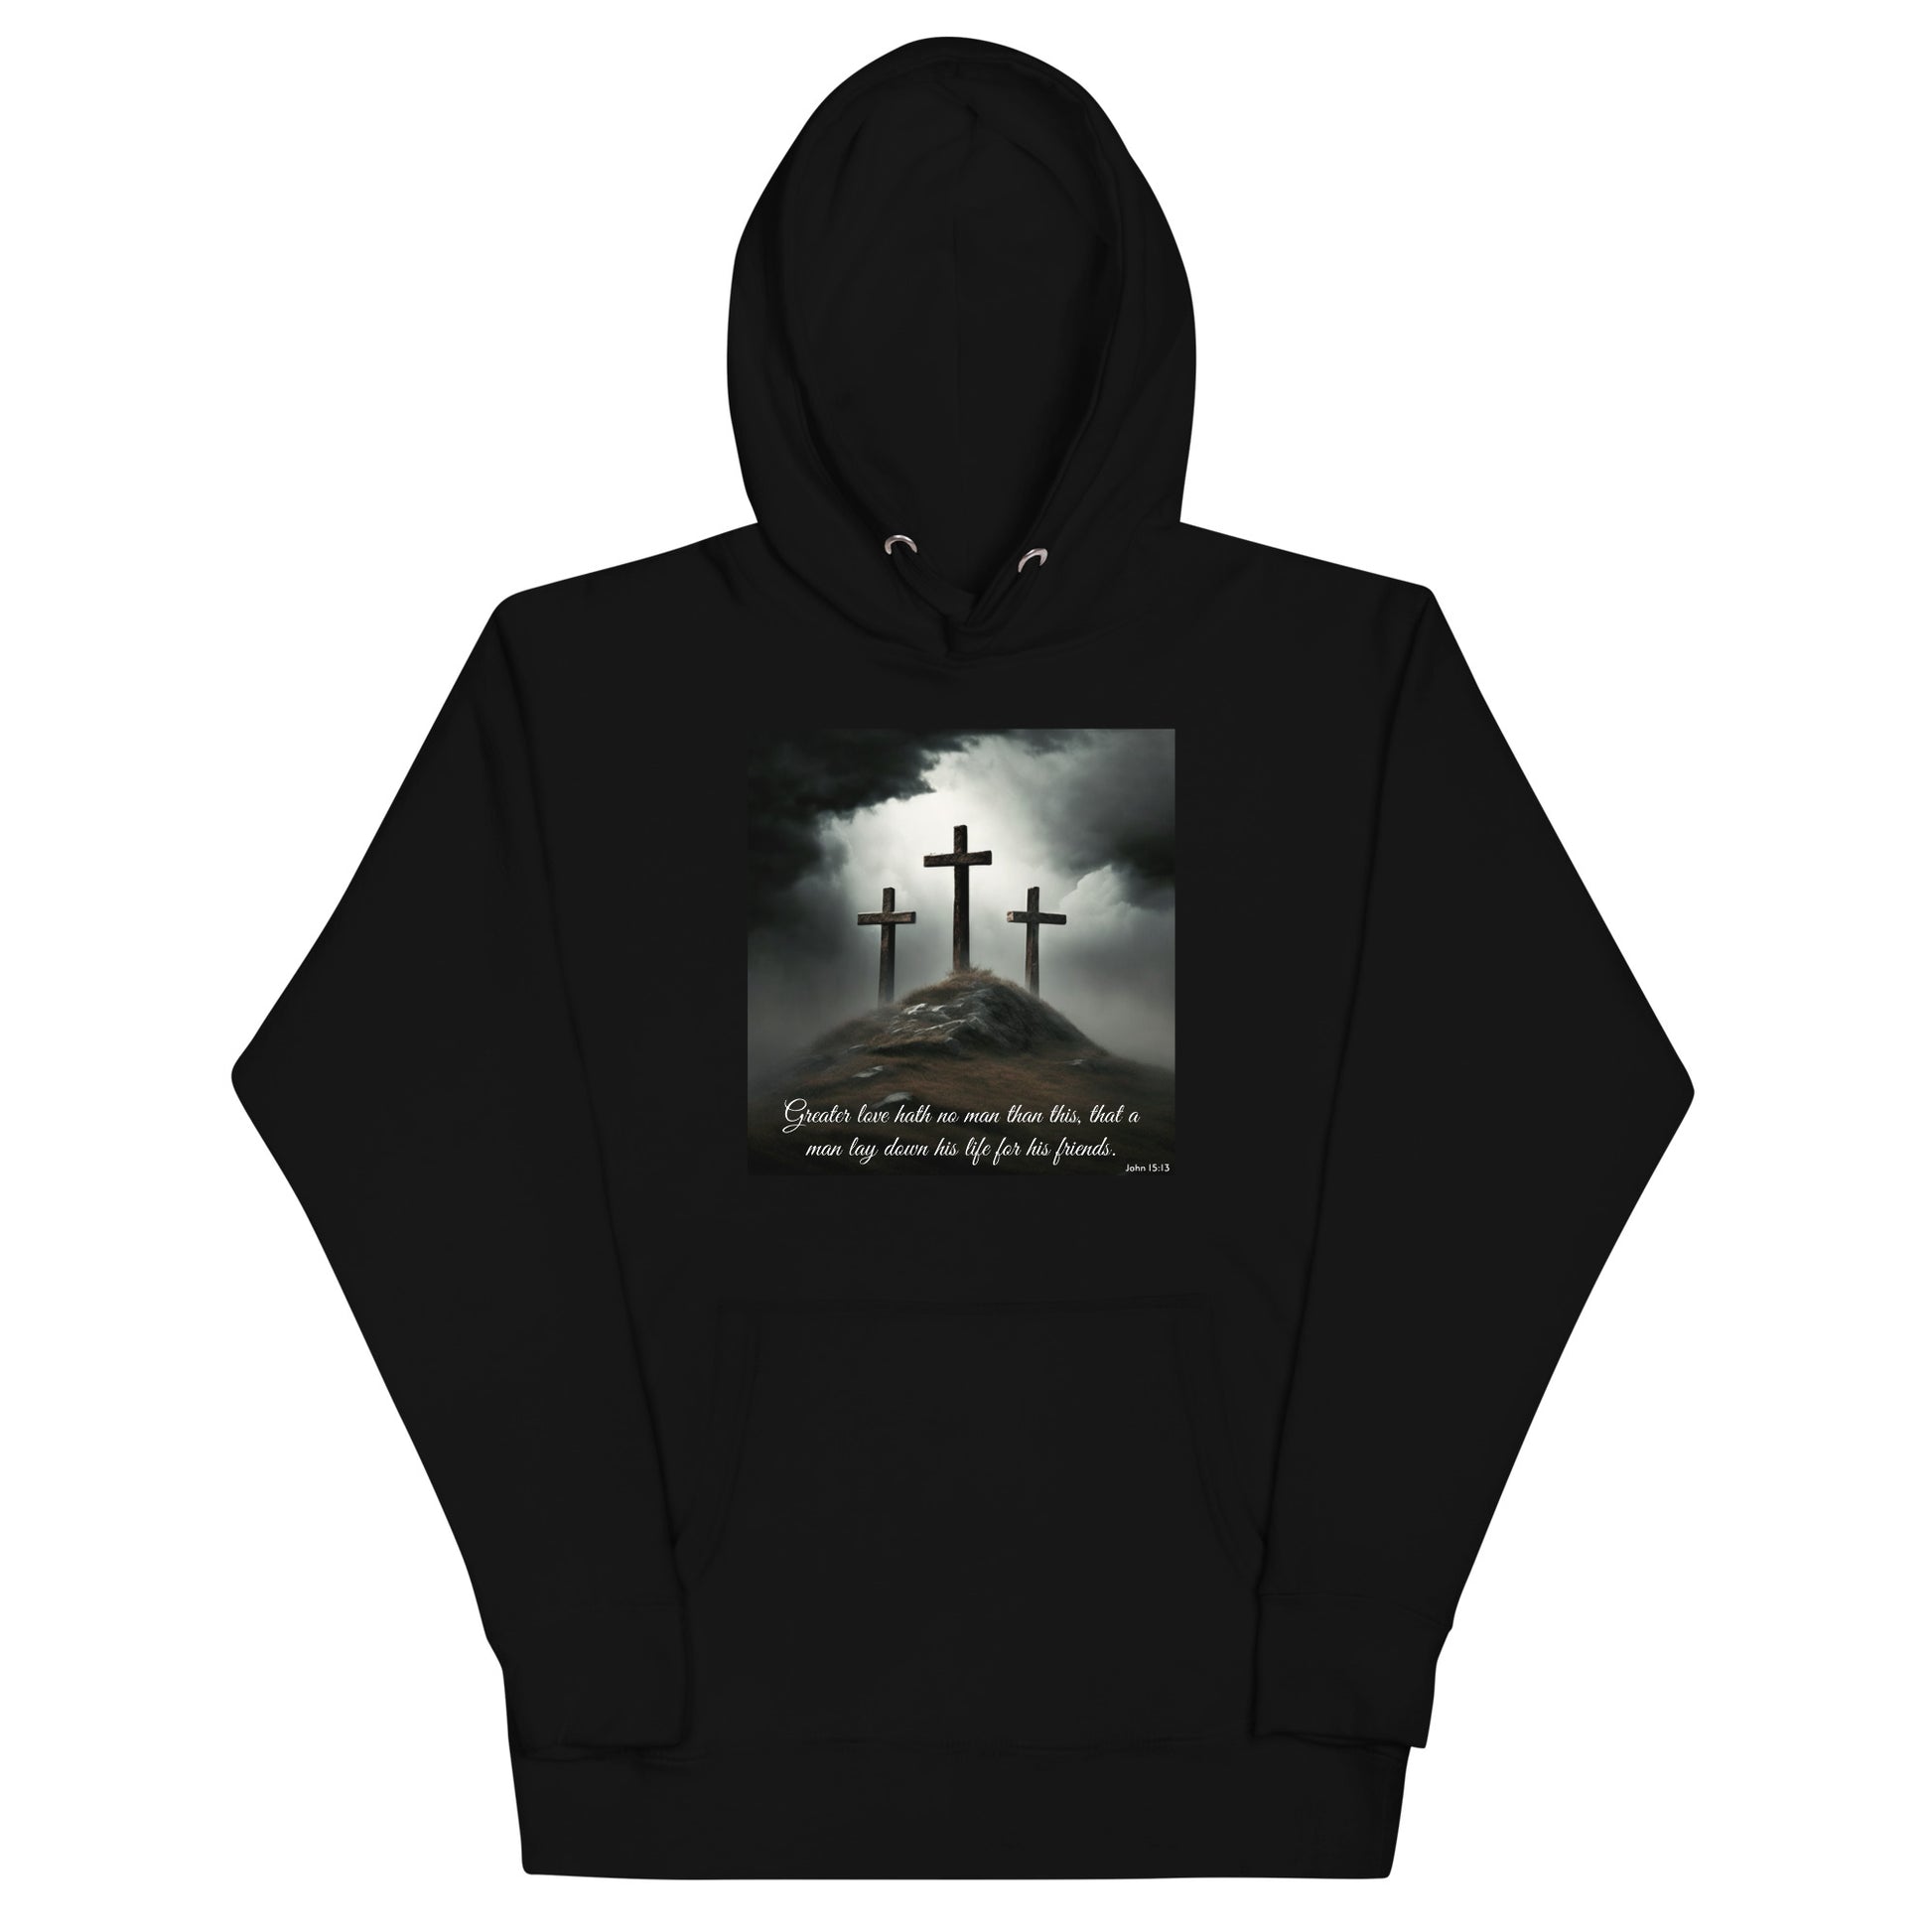 Three Crosses Crucifixion Men's Hooded Sweatshirt John 15:13 Black